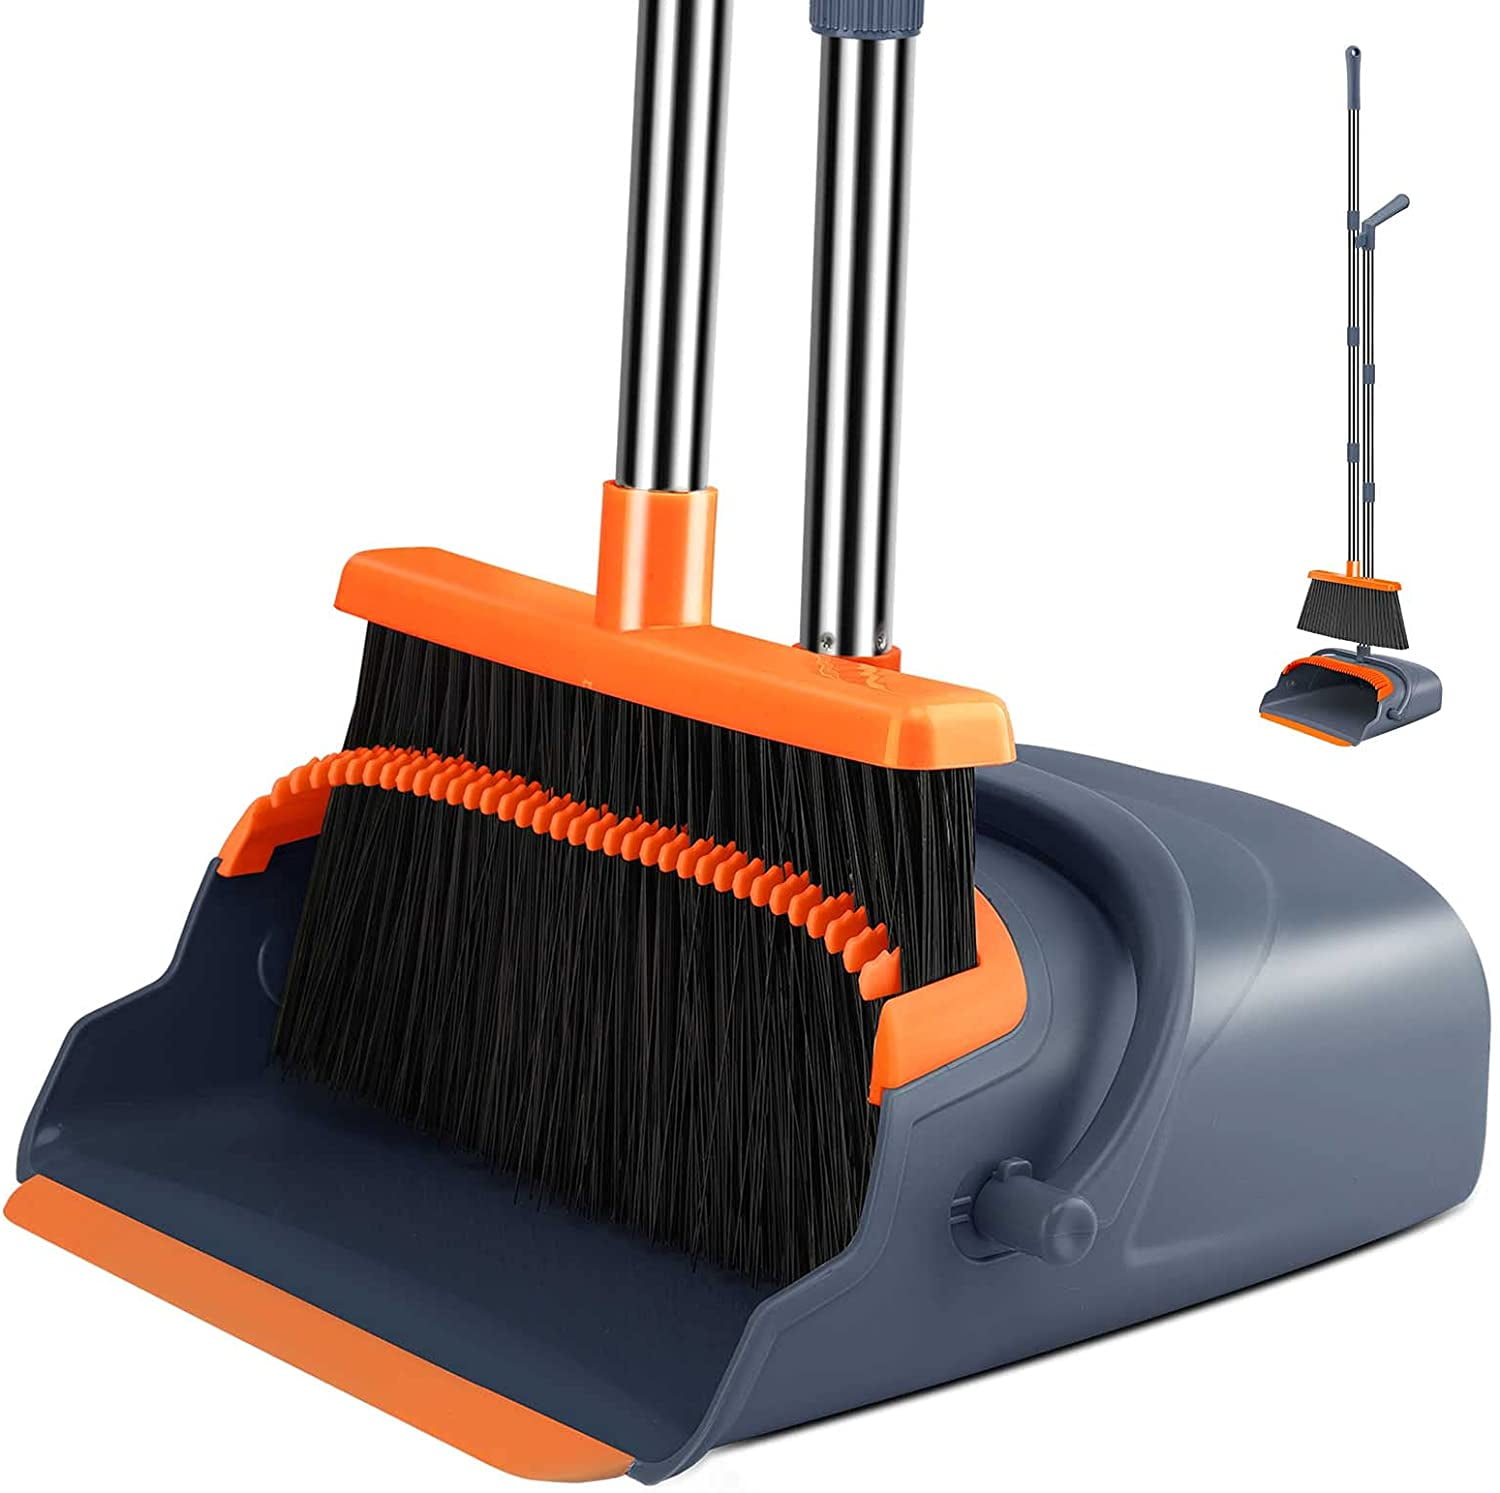 Black Long Handled Brush & Dustpan Set Floor Sweeping Cleaning Broom Set New